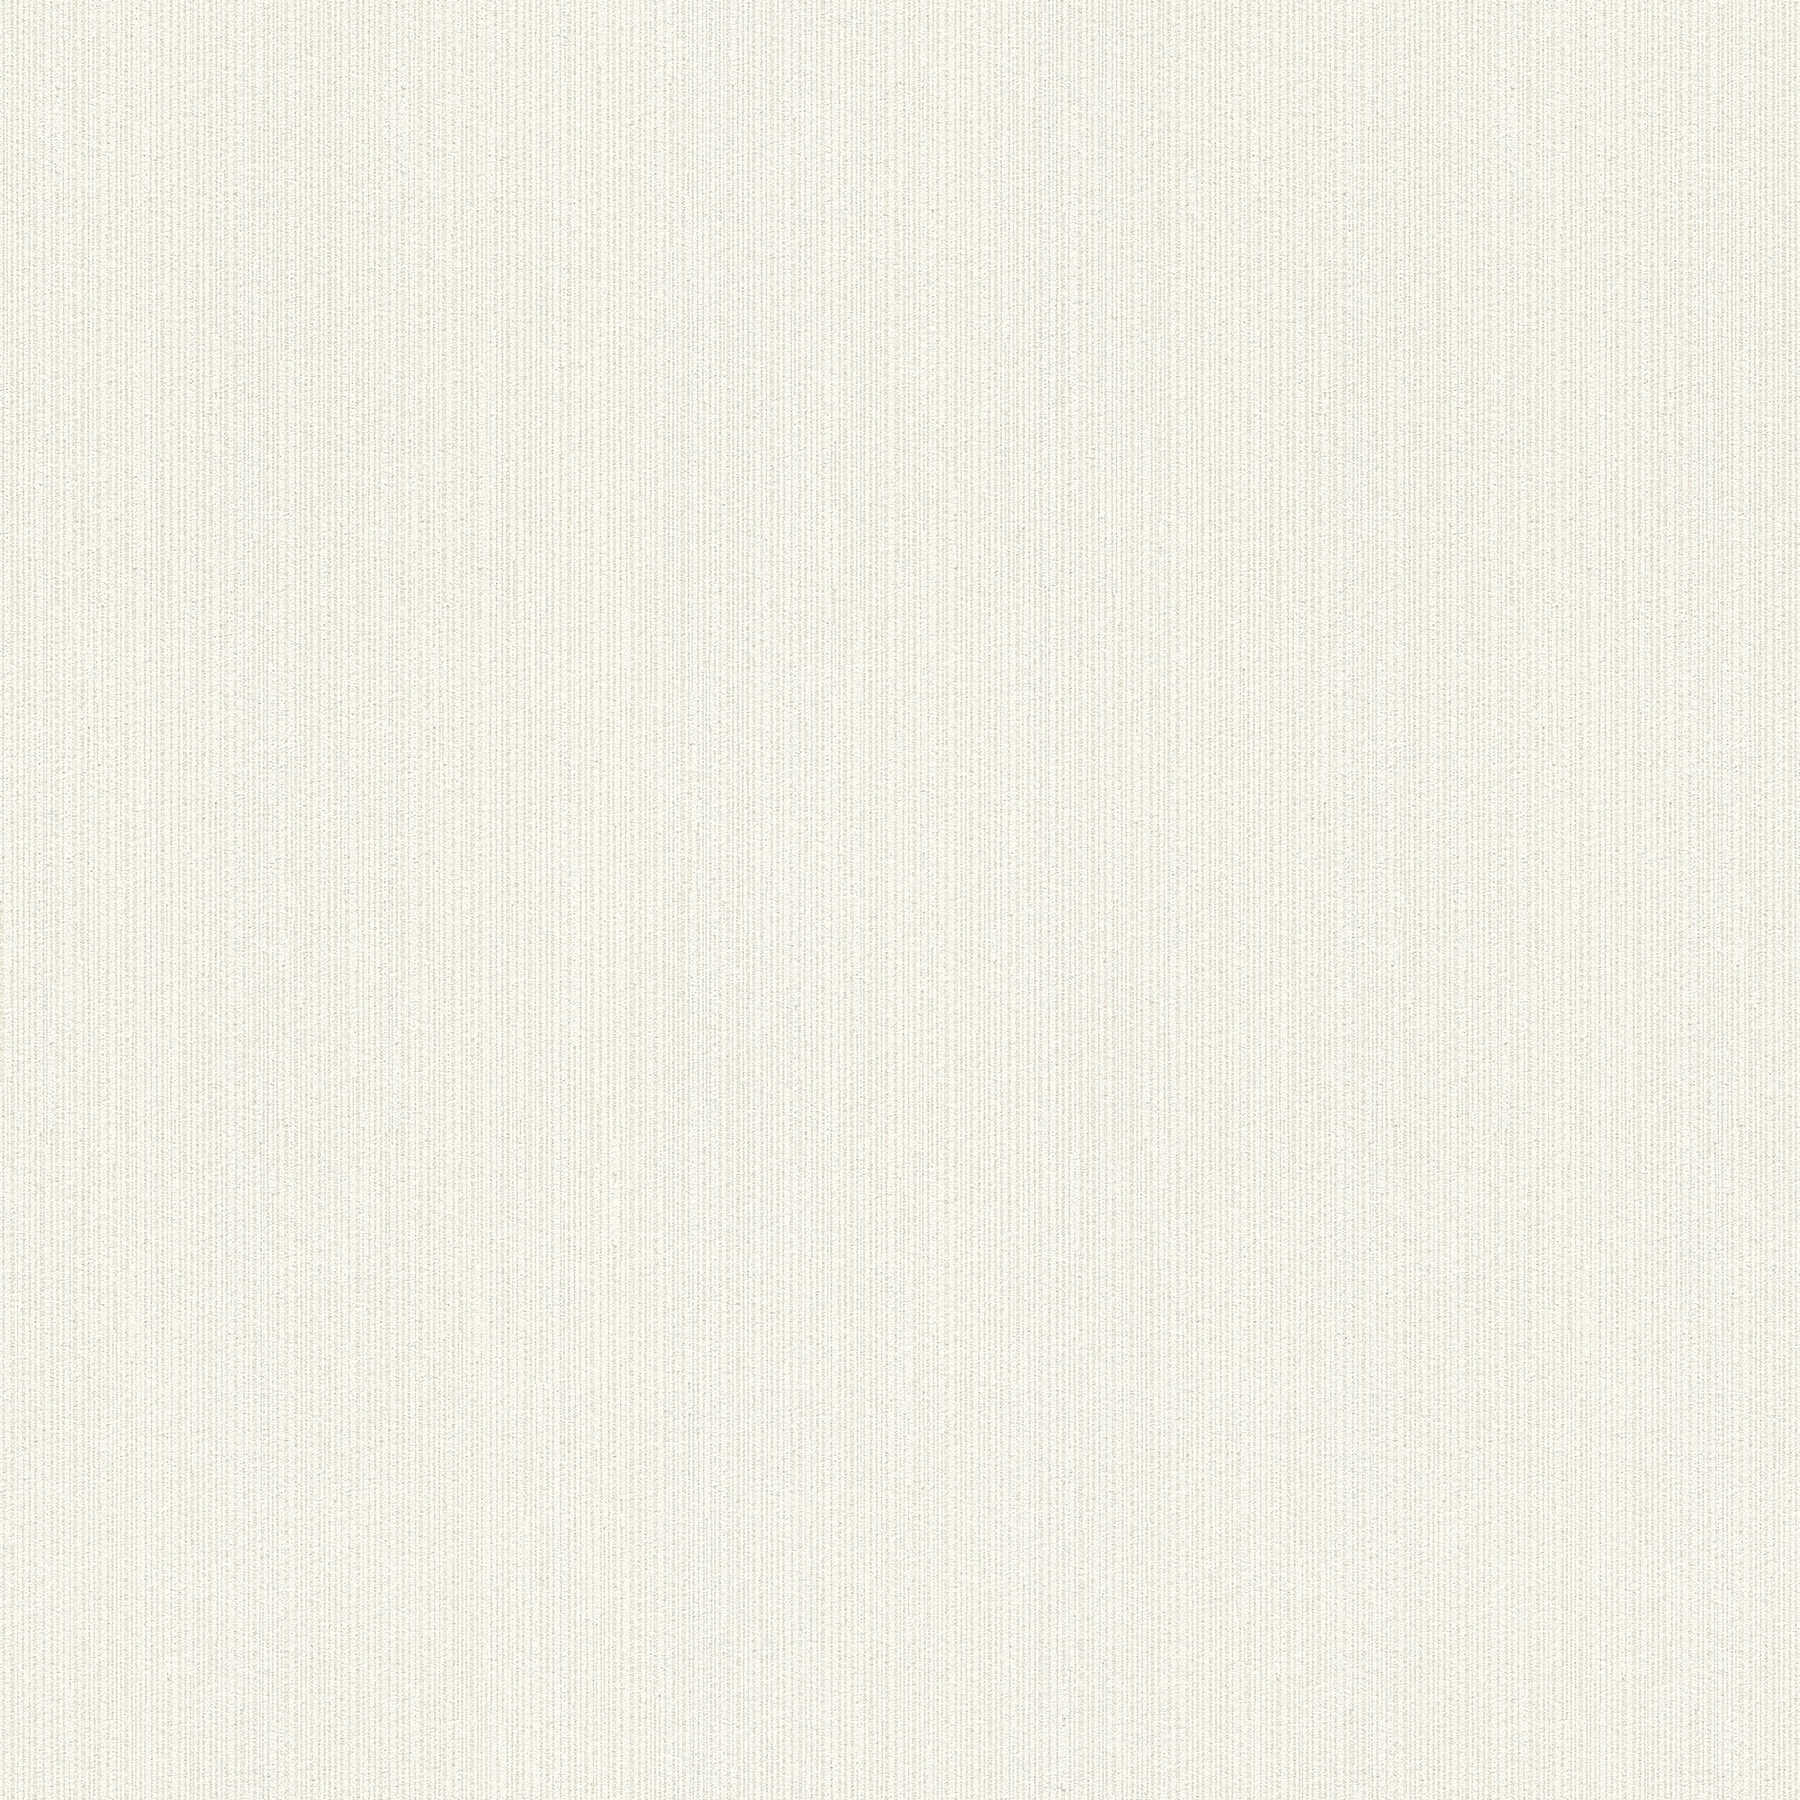 Modern non-woven wallpaper plain white with texture effect
